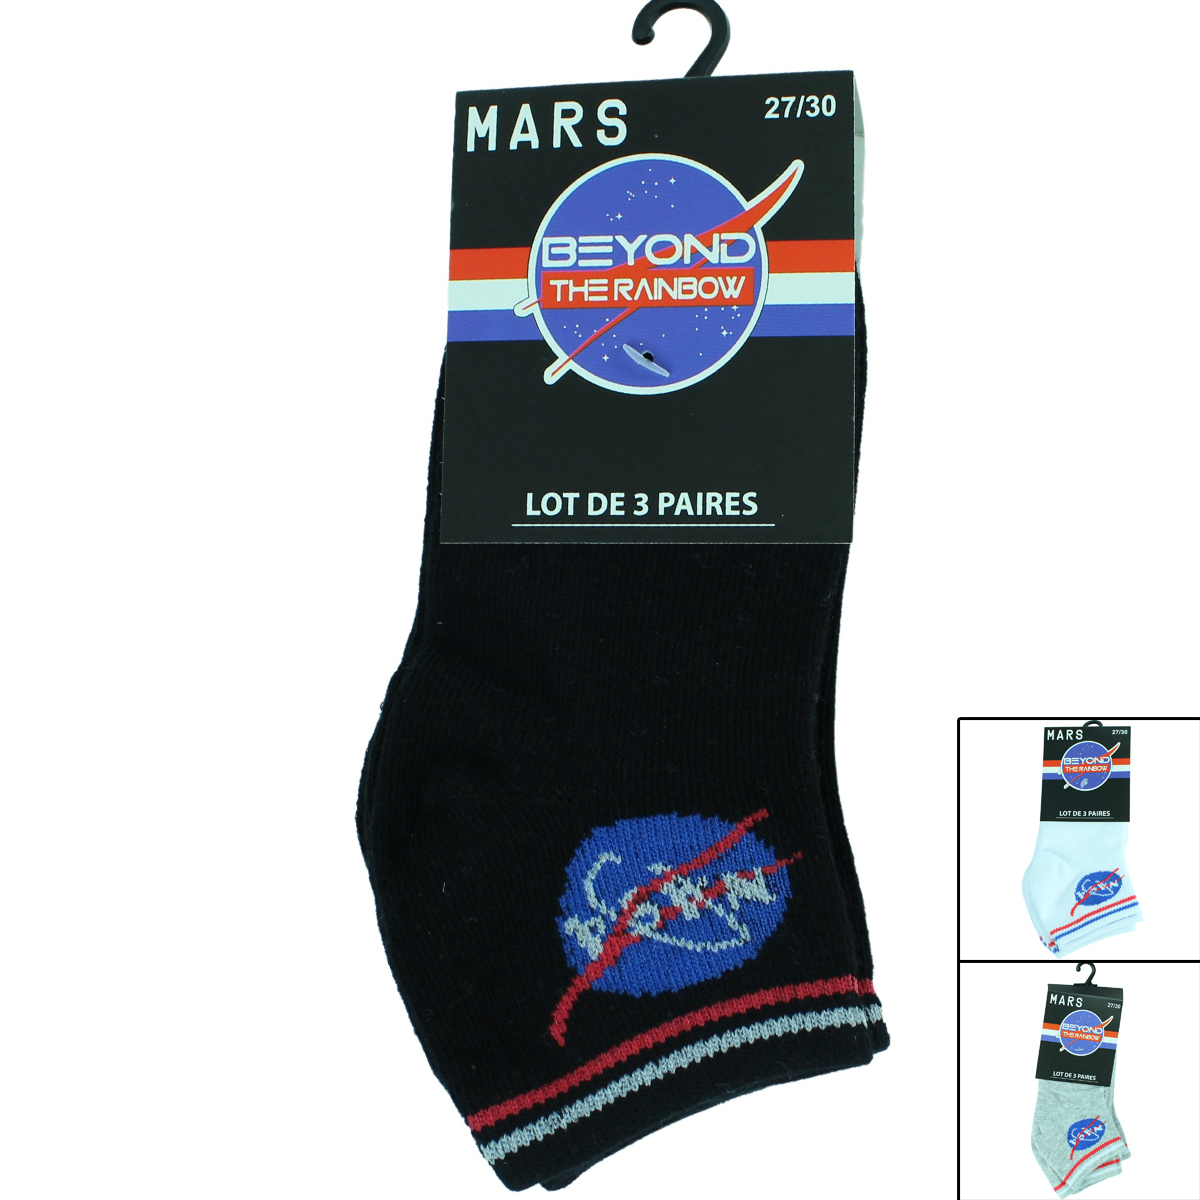 Nasa Pair of 3 socks